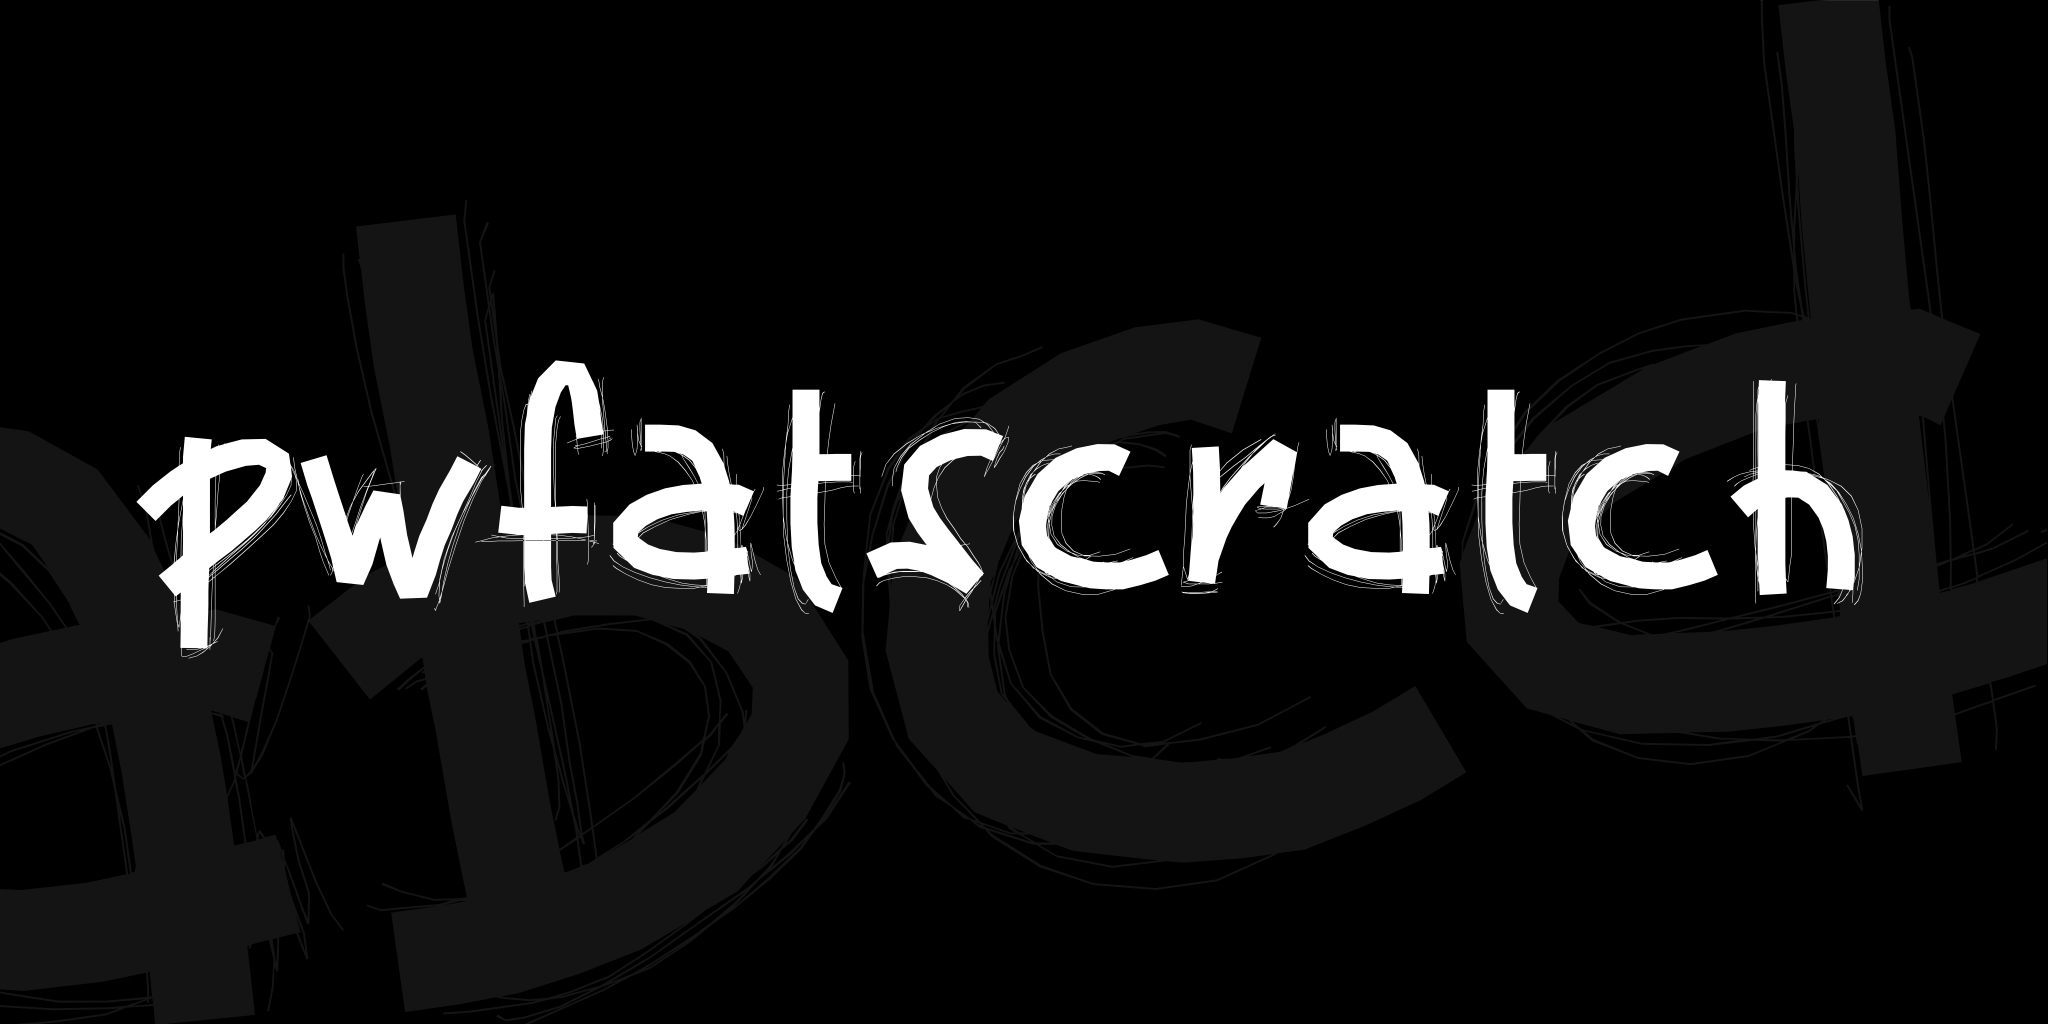 Pw Fatscratch